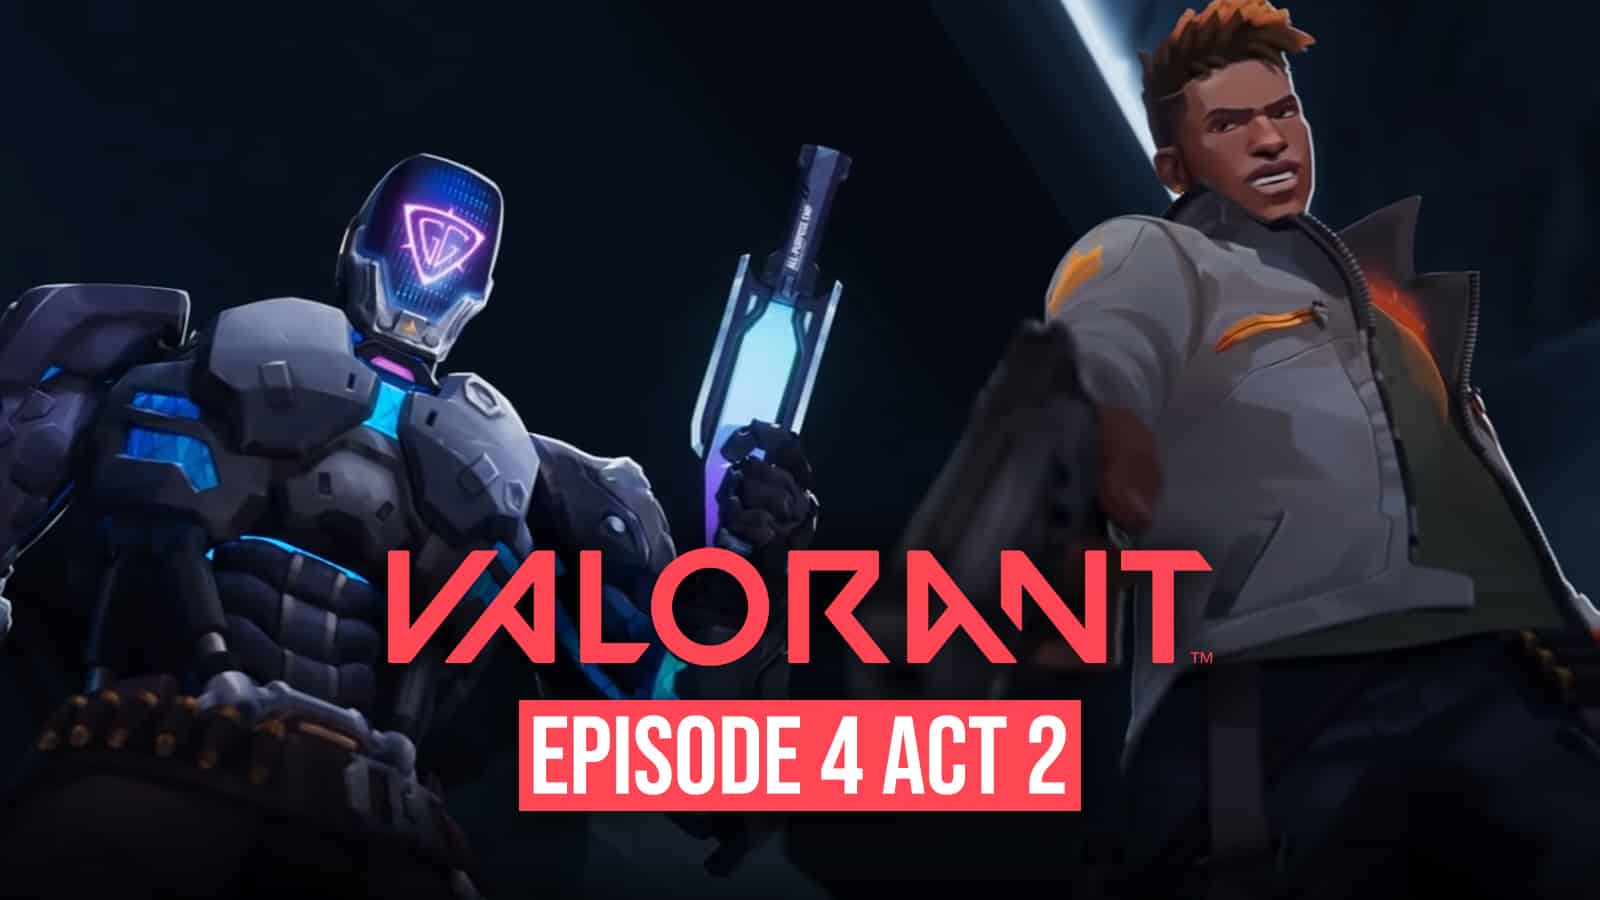 Valorant Episode 4 Act 2 details